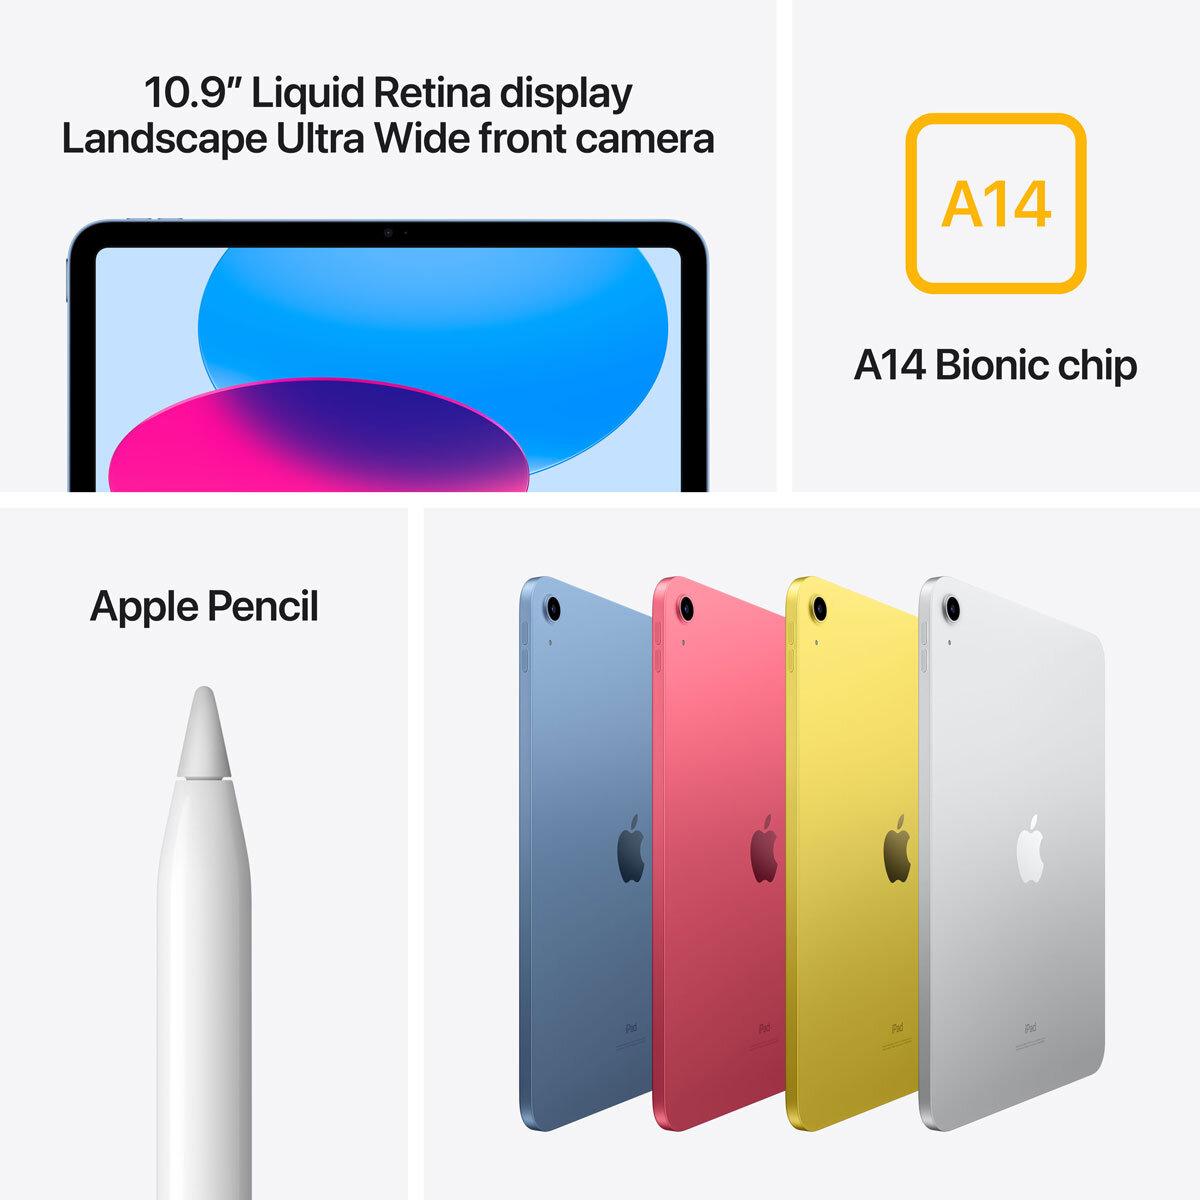 Buy Apple iPad 10th Gen, 10.9 Inch, WiFi, 256GB in Silver, MPQ83B/A at costco.co.uk